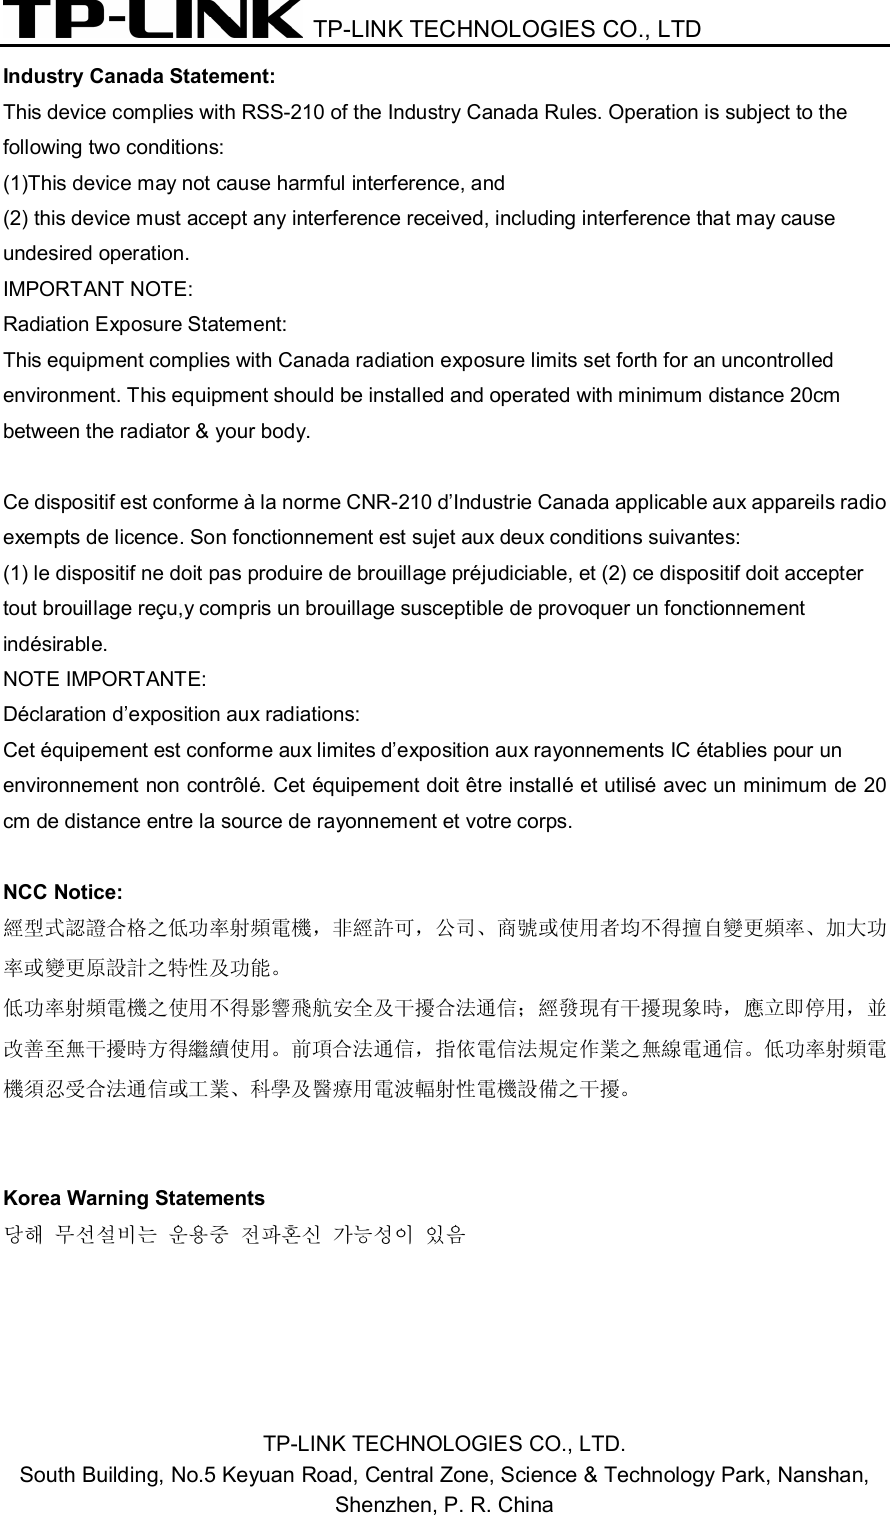  TP-LINK TECHNOLOGIES CO., LTD  TP-LINK TECHNOLOGIES CO., LTD. South Building, No.5 Keyuan Road, Central Zone, Science &amp; Technology Park, Nanshan,   Shenzhen, P. R. China  Industry Canada Statement: This device complies with RSS-210 of the Industry Canada Rules. Operation is subject to the   following two conditions: (1)This device may not cause harmful interference, and (2) this device must accept any interference received, including interference that may cause   undesired operation. IMPORTANT NOTE: Radiation Exposure Statement: This equipment complies with Canada radiation exposure limits set forth for an uncontrolled   environment. This equipment should be installed and operated with minimum distance 20cm   between the radiator &amp; your body.  Ce dispositif est conforme à la norme CNR-210 d’Industrie Canada applicable aux appareils radio   exempts de licence. Son fonctionnement est sujet aux deux conditions suivantes: (1) le dispositif ne doit pas produire de brouillage préjudiciable, et (2) ce dispositif doit accepter   tout brouillage reçu,y compris un brouillage susceptible de provoquer un fonctionnement indésirable. NOTE IMPORTANTE:   Déclaration d’exposition aux radiations: Cet équipement est conforme aux limites d’exposition aux rayonnements IC établies pour un   environnement non contrôlé. Cet équipement doit être installé et utilisé avec un minimum de 20 cm de distance entre la source de rayonnement et votre corps.    NCC Notice: 經型式認證合格之低功率射頻電機，非經許可，公司、商號或使用者均不得擅自變更頻率、加大功 率或變更原設計之特性及功能。 低功率射頻電機之使用不得影響飛航安全及干擾合法通信；經發現有干擾現象時，應立即停用，並 改善至無干擾時方得繼續使用。前項合法通信，指依電信法規定作業之無線電通信。低功率射頻電 機須忍受合法通信或工業、科學及醫療用電波輻射性電機設備之干擾。   Korea Warning Statements 당해 무선설비는 운용중 전파혼신 가능성이 있음